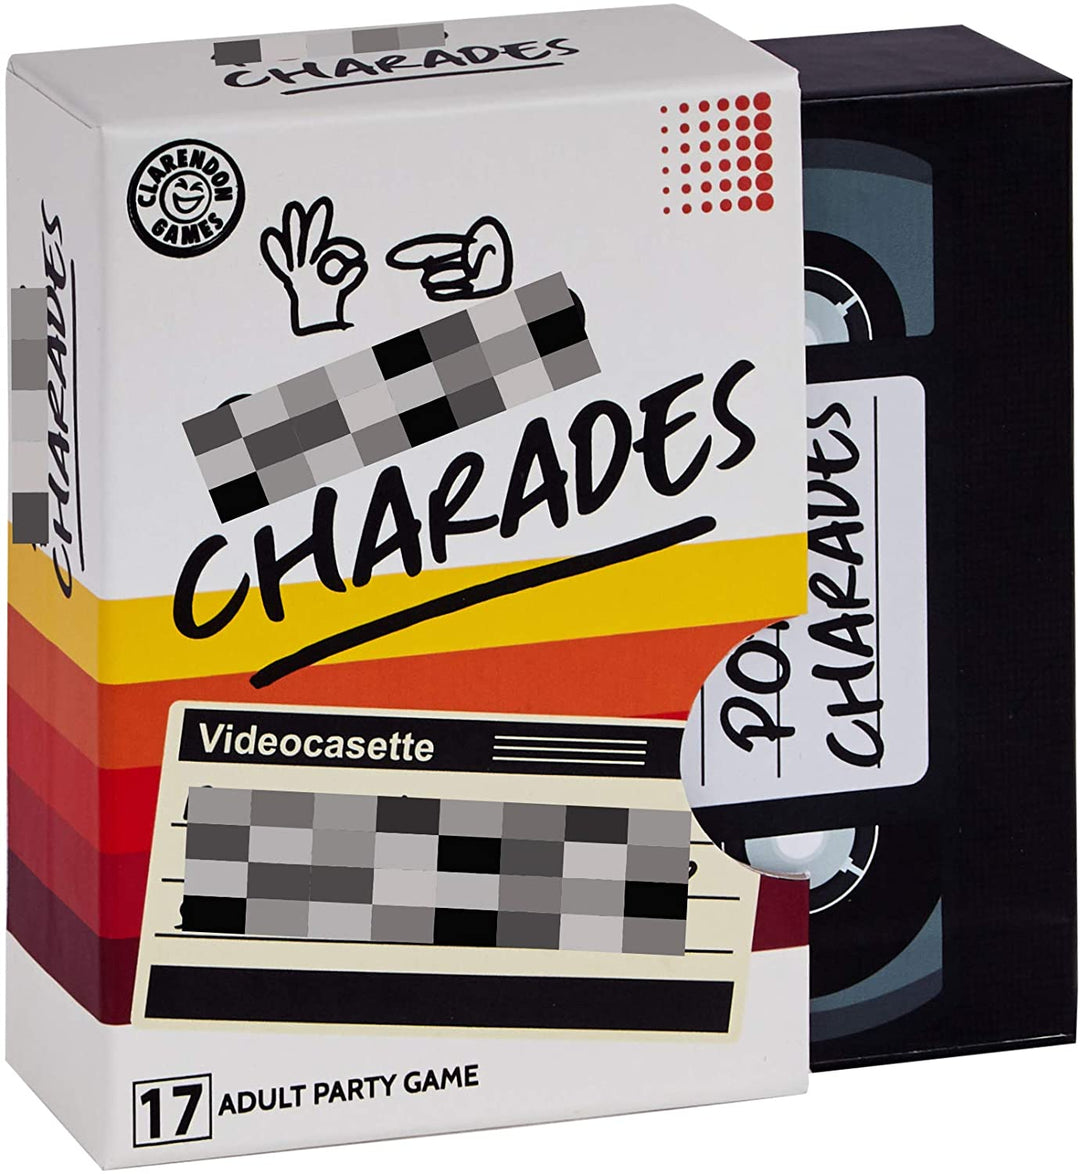 Clarendon Games Po Charades